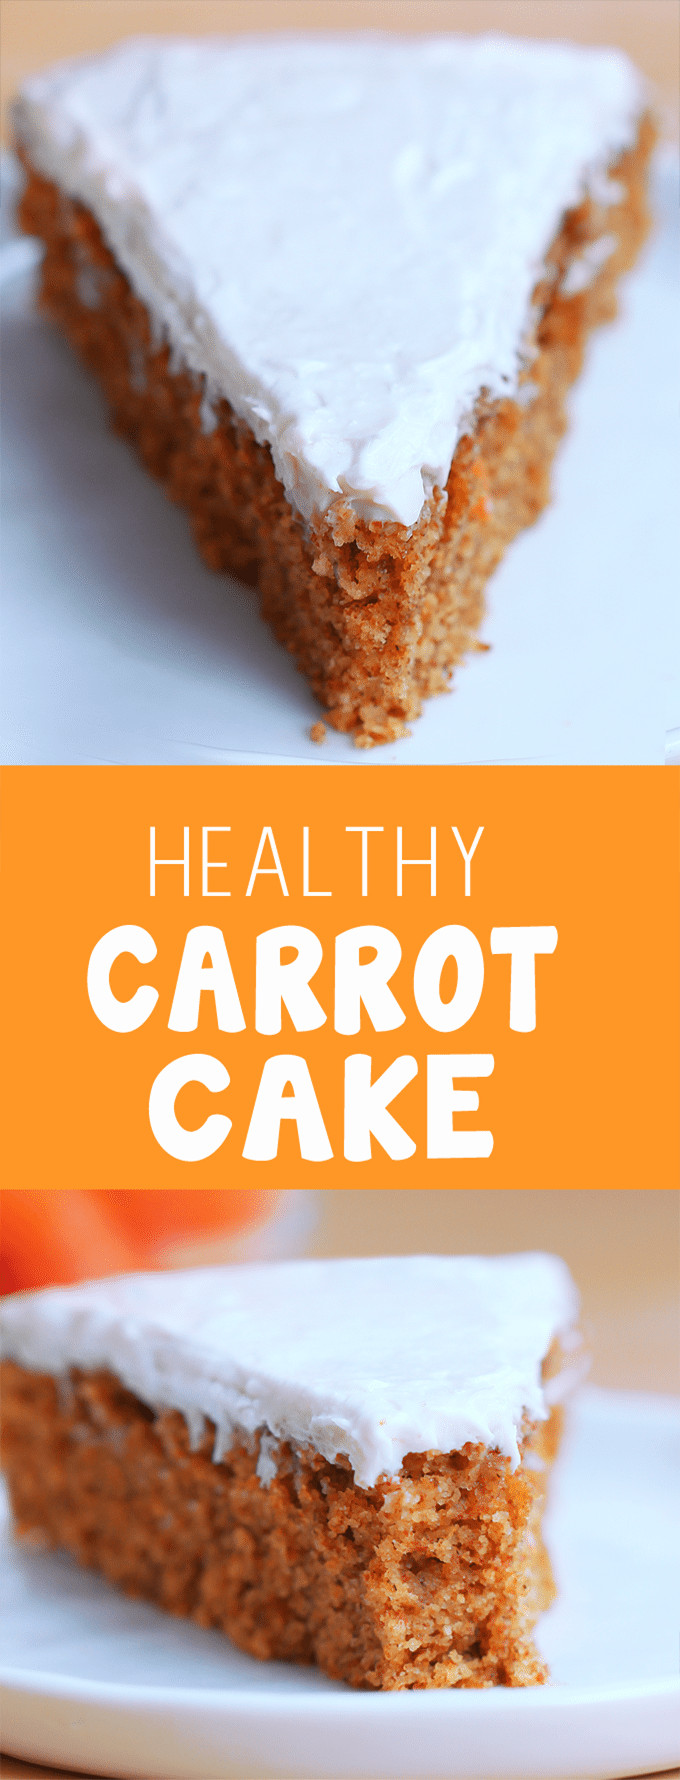 Healthy Carrot Cake Recipe
 Healthy Carrot Cake